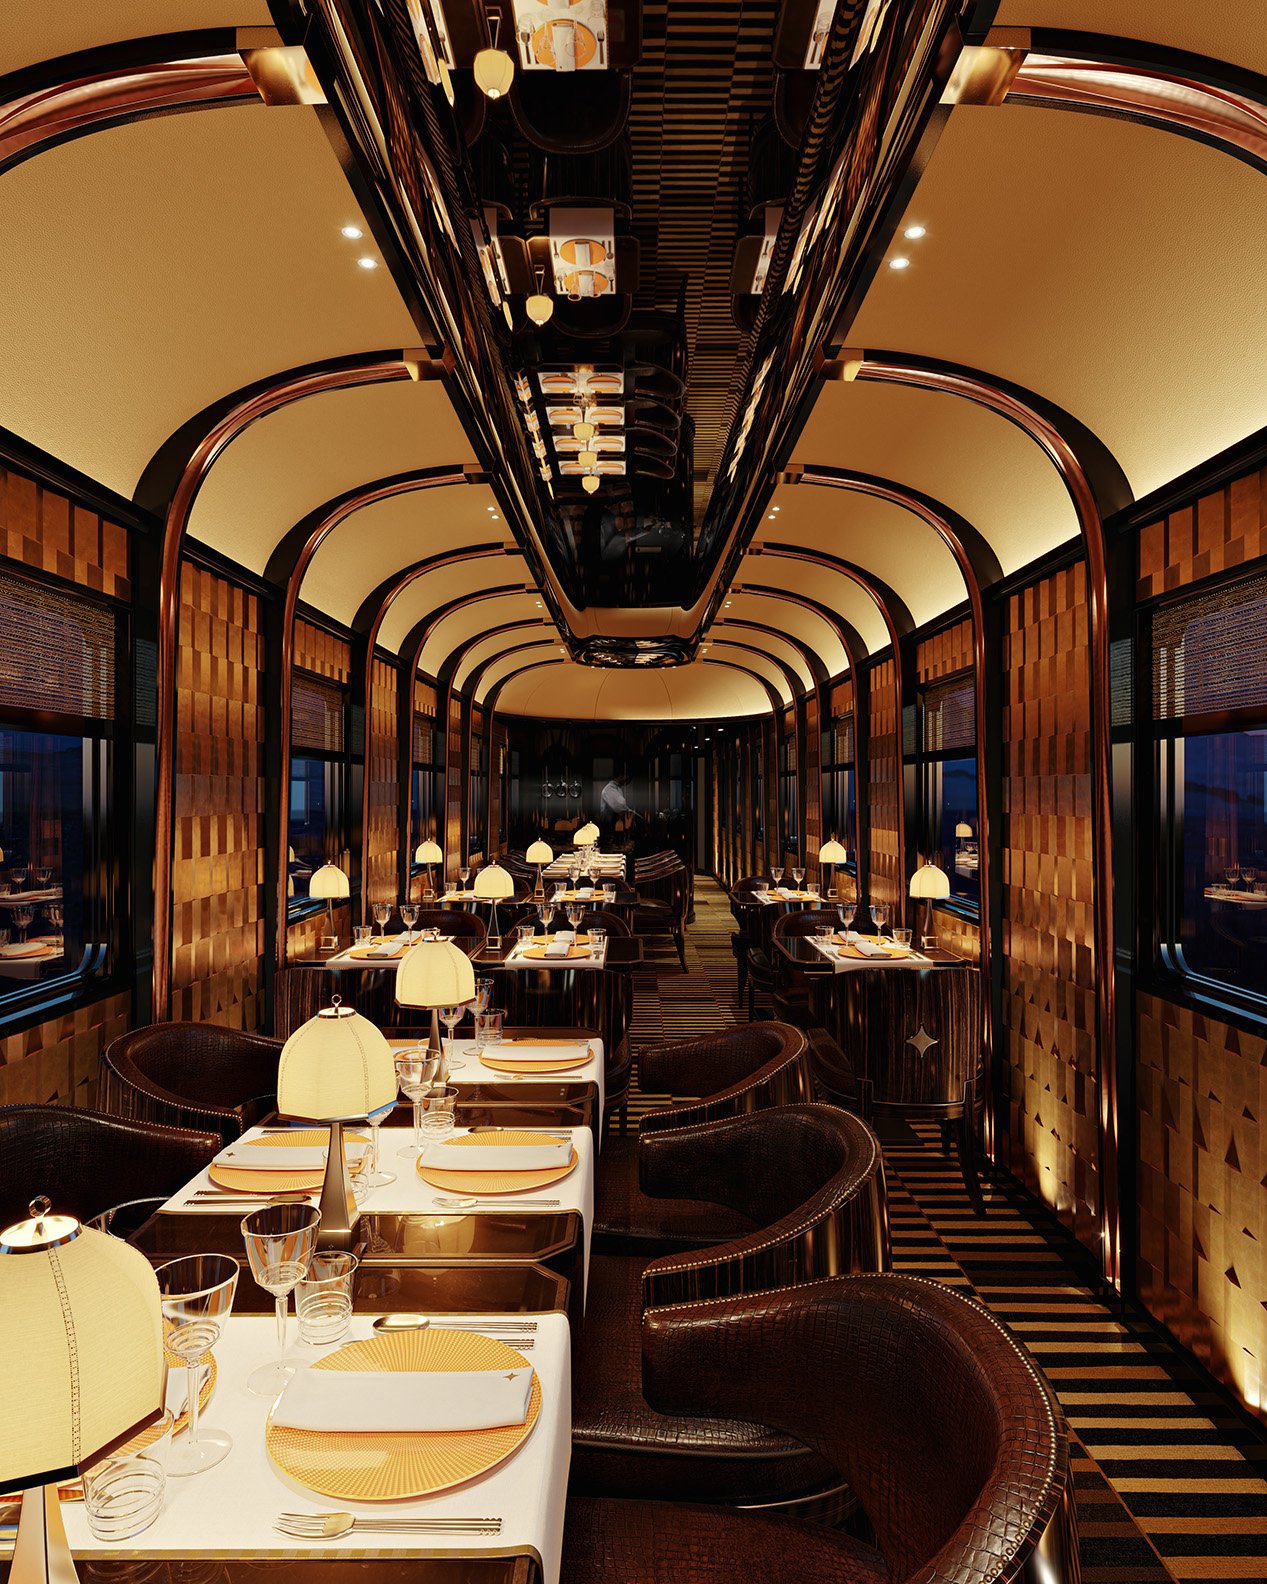 The Orient express gets a new luxurious bar car - Luxurylaunches